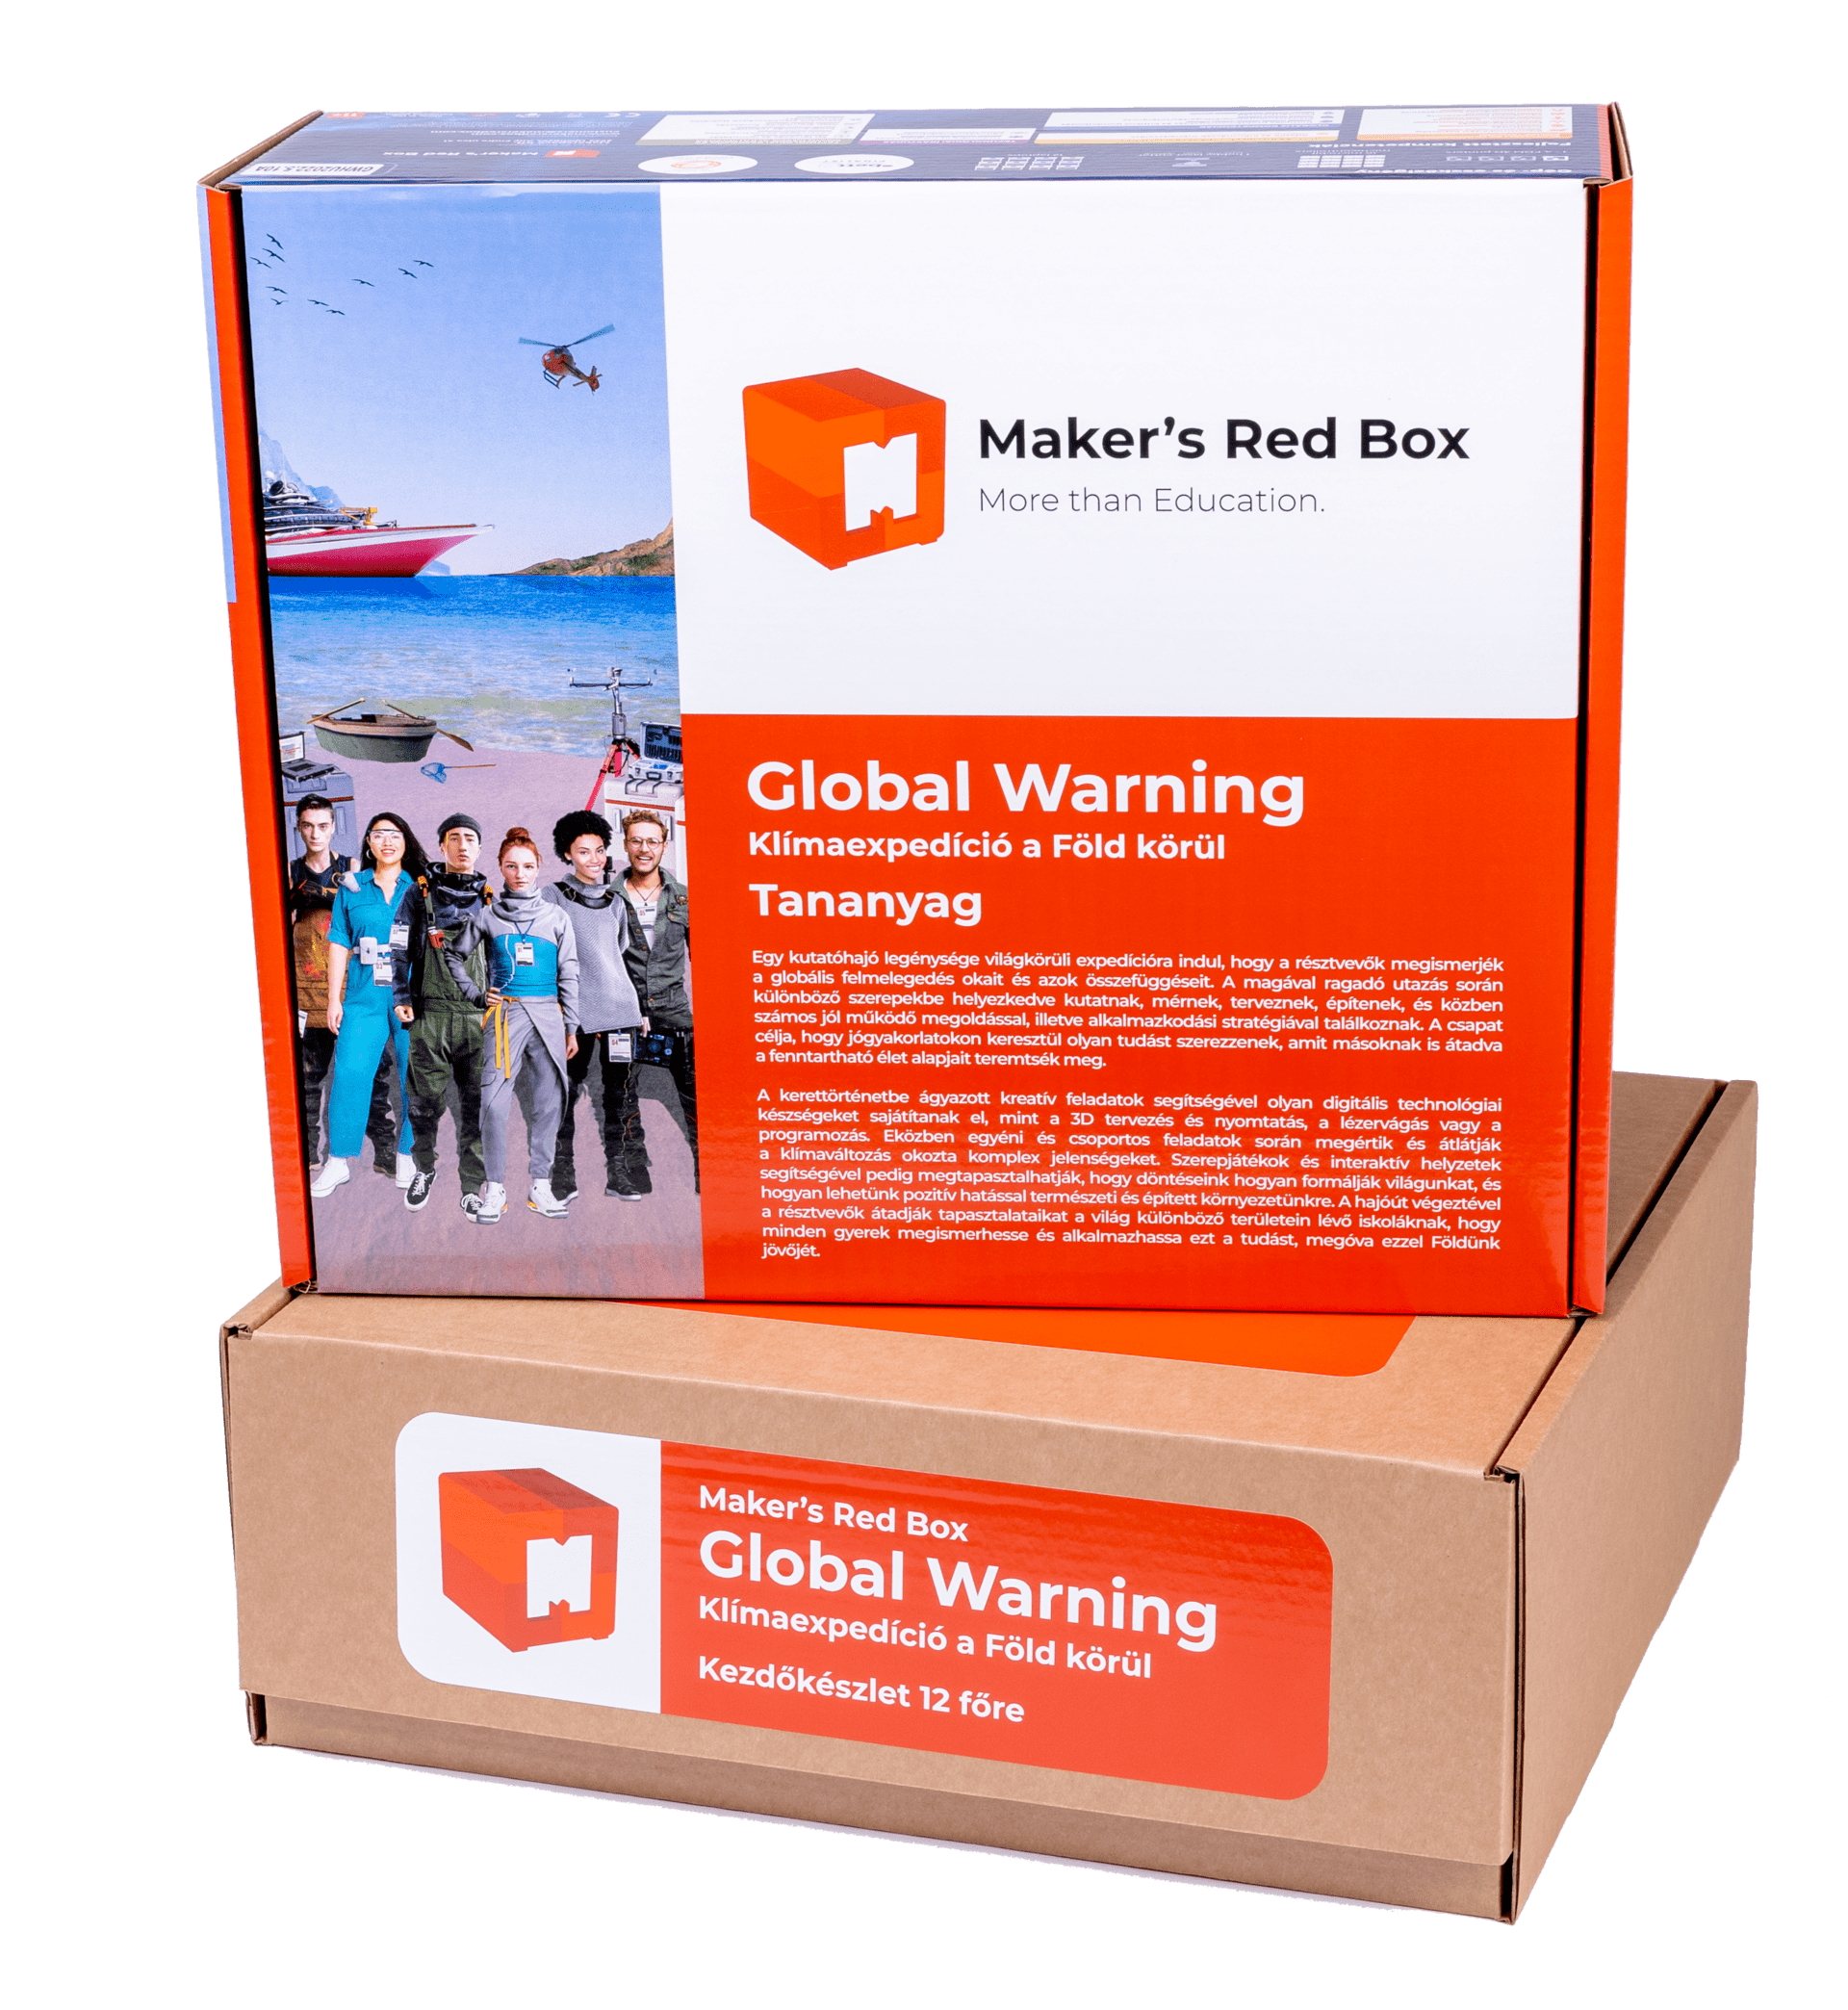 https://makersredbox.com/wp-content/uploads/2020/01/Global-warning-tananyag-box.png